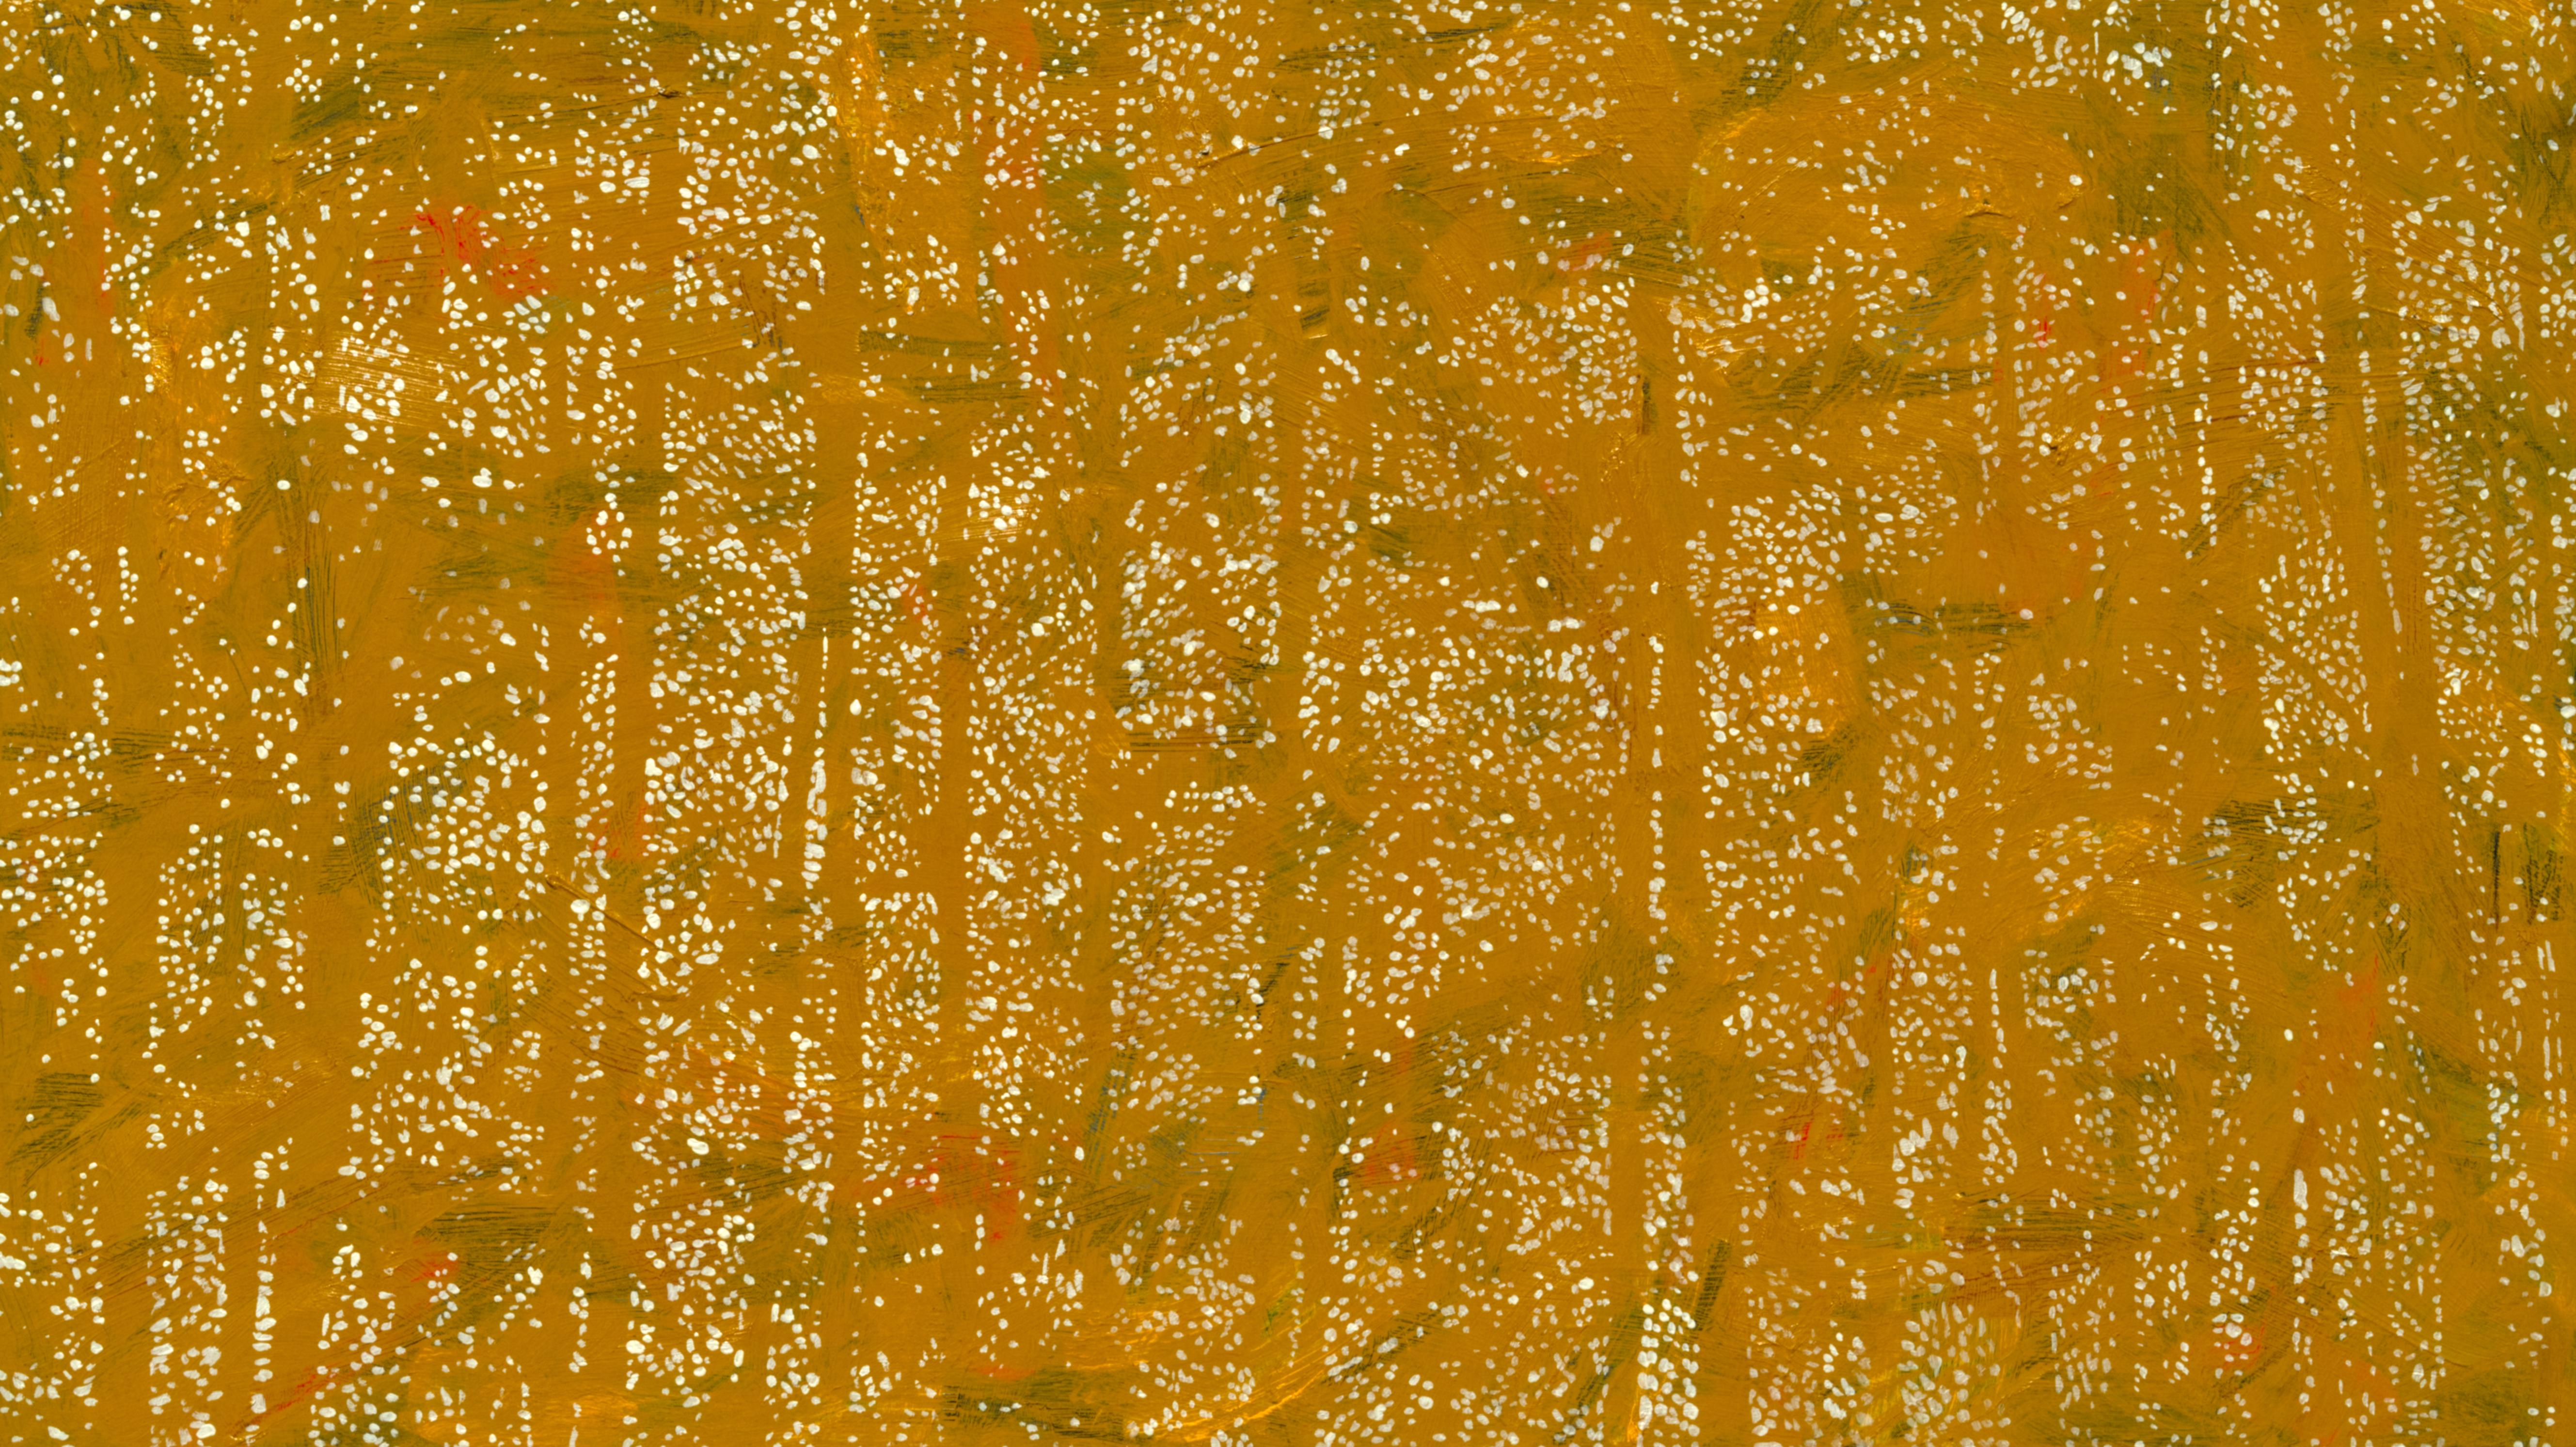 Robert Motelski Landscape Painting - Trees 19 October 11:43 - Modern Nature Painting, Landscape, Forest, Contemplativ